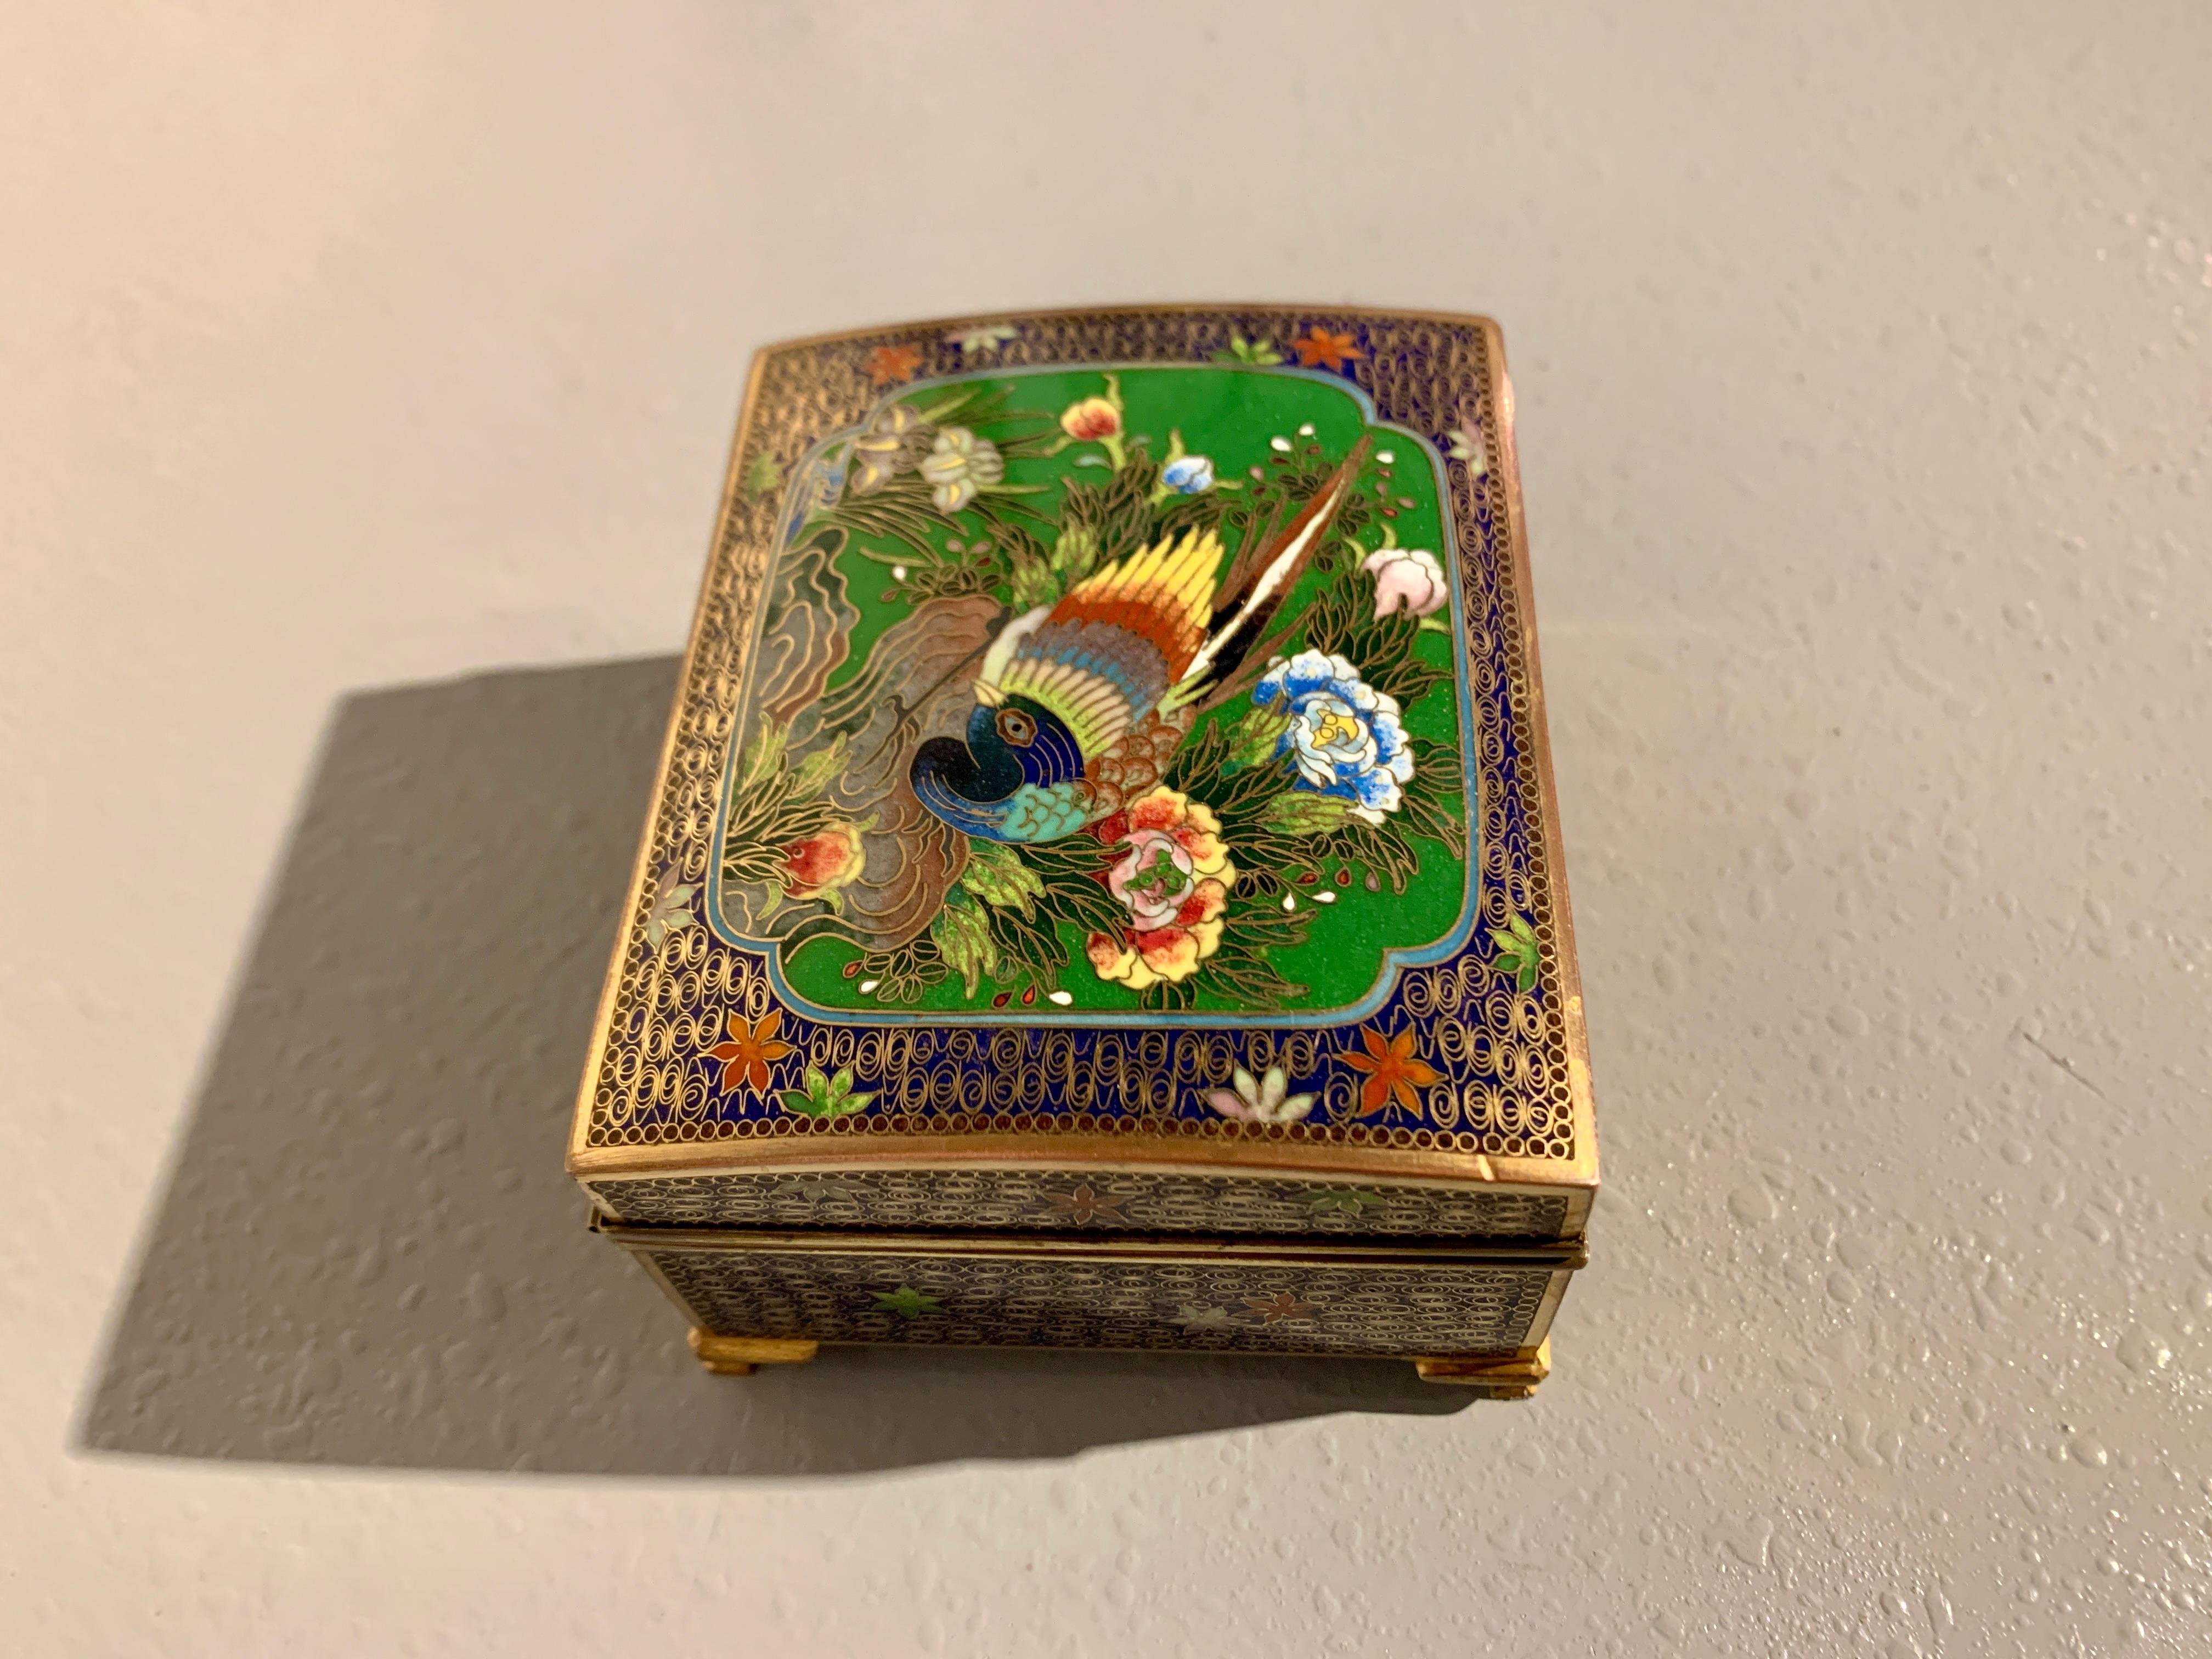 Early 20th Century Small Japanese Cloisonne Enamel Trinket Box with Pheasant, Meiji Period, Japan